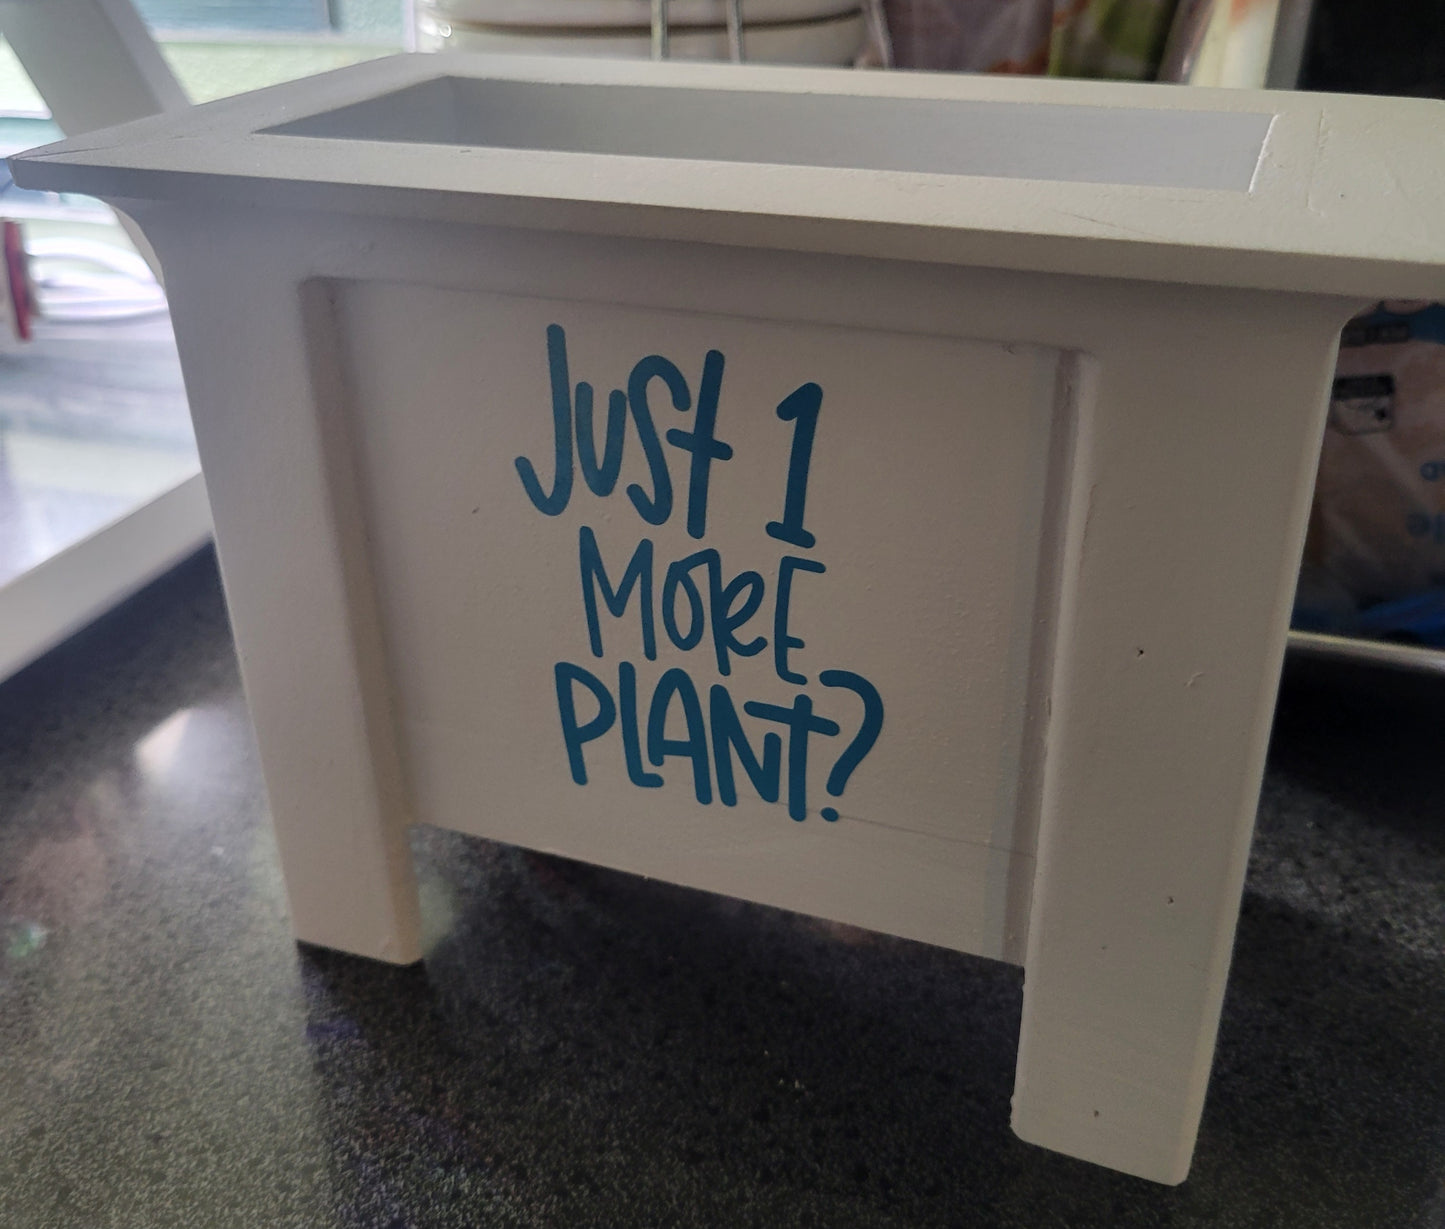 Planter Boxes